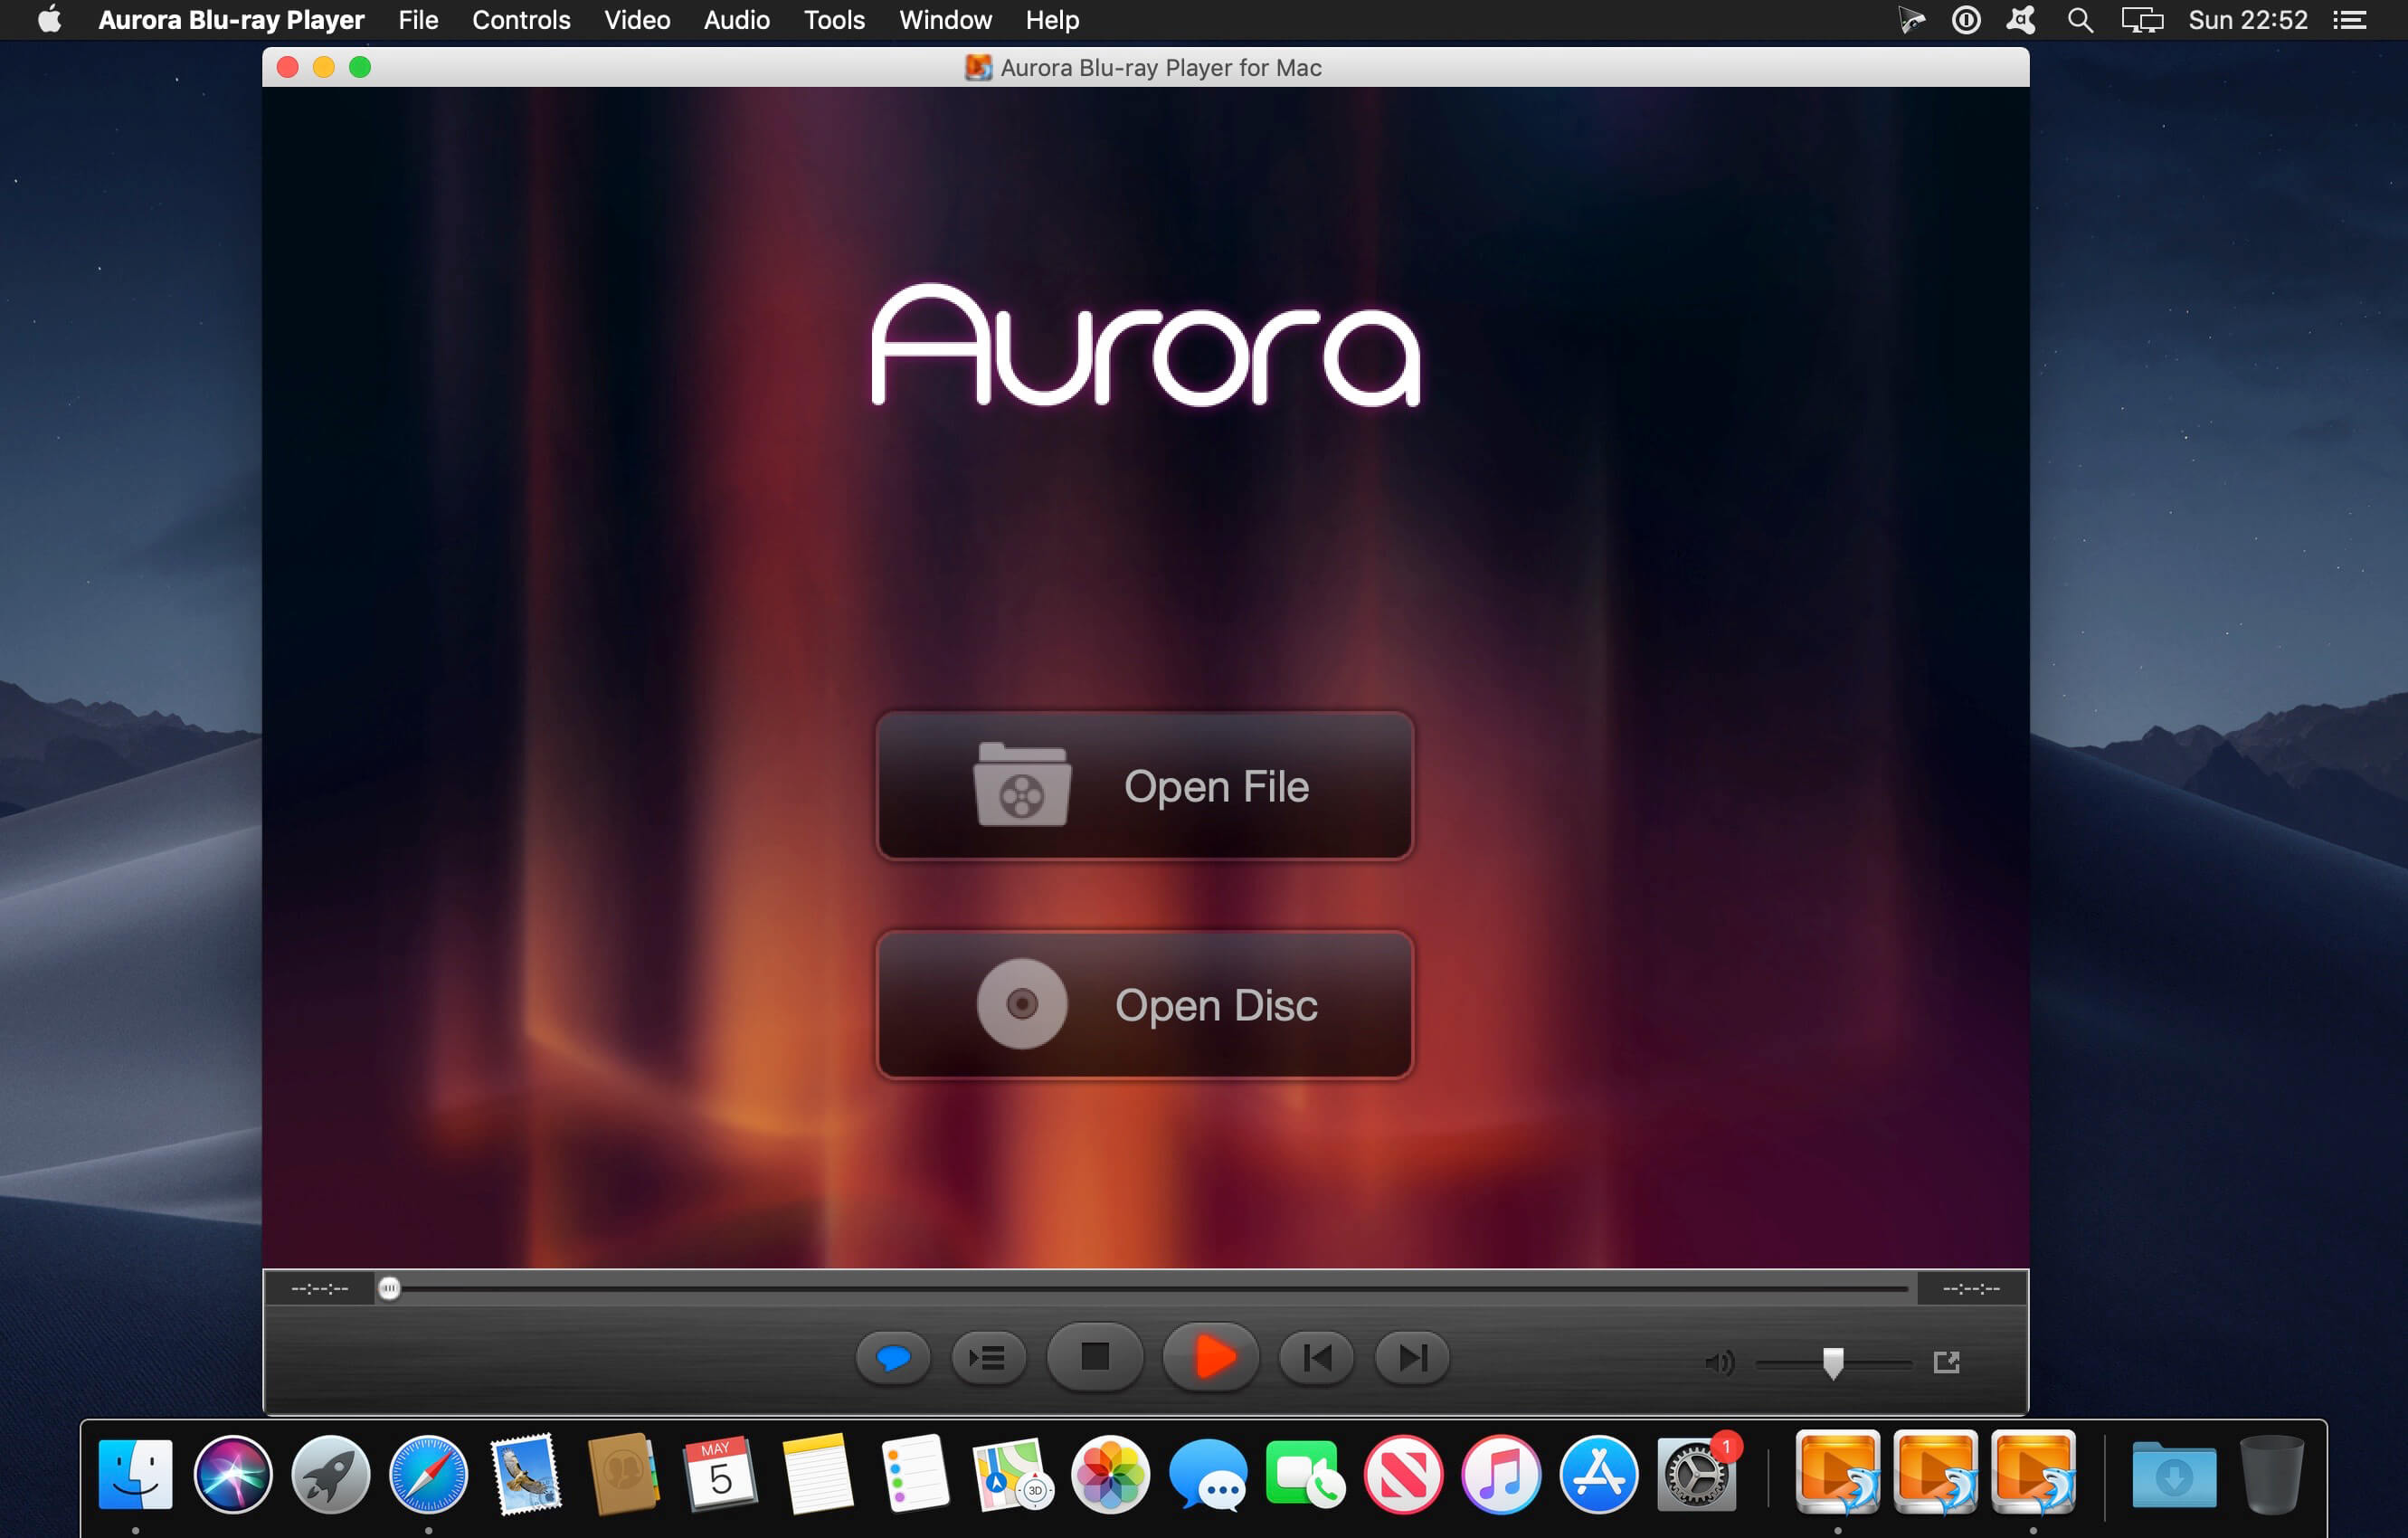 aurora blu ray player for mac free download